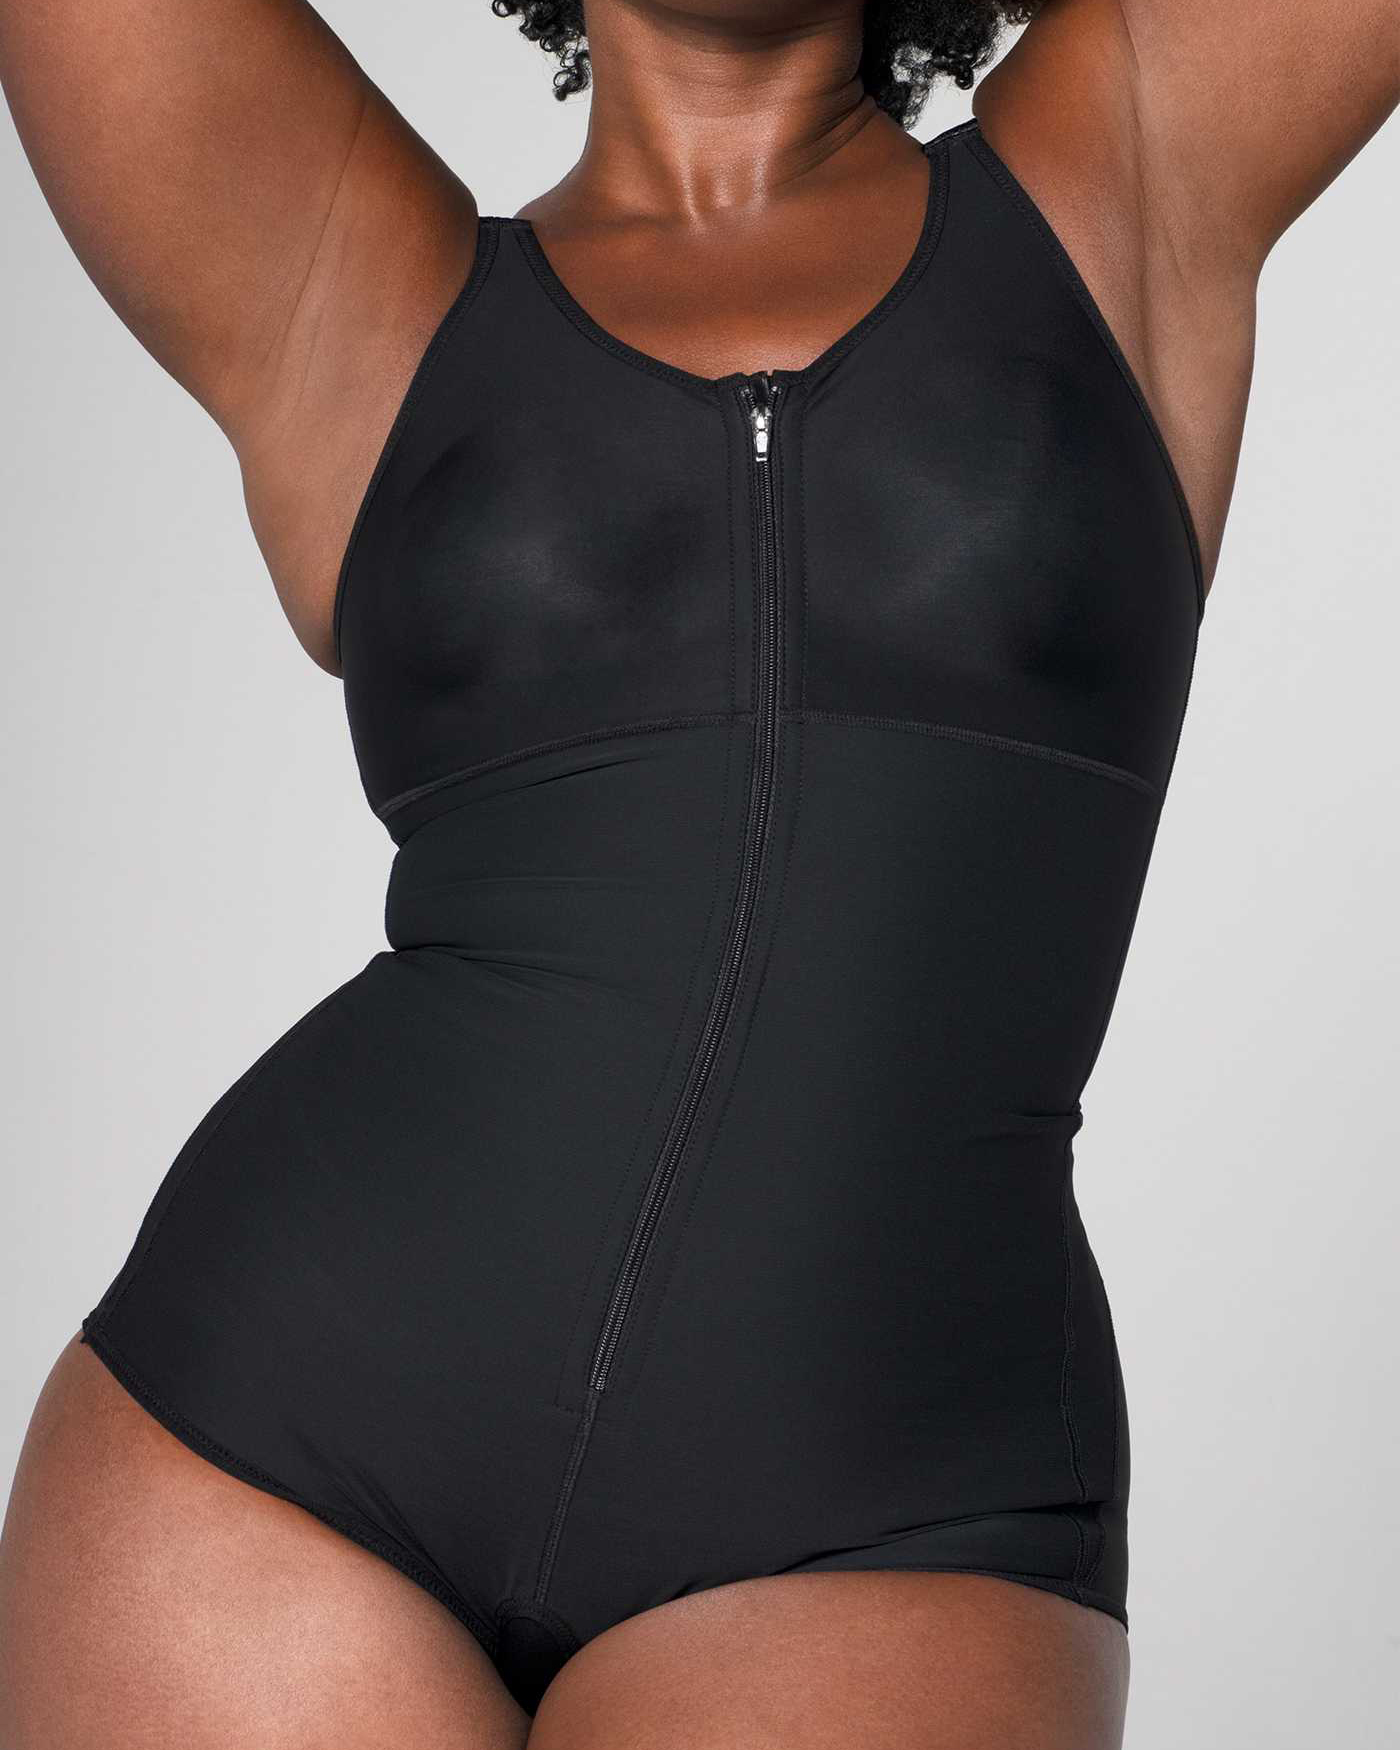 Women's Tummy Control Thong Bodysuit with Zipper